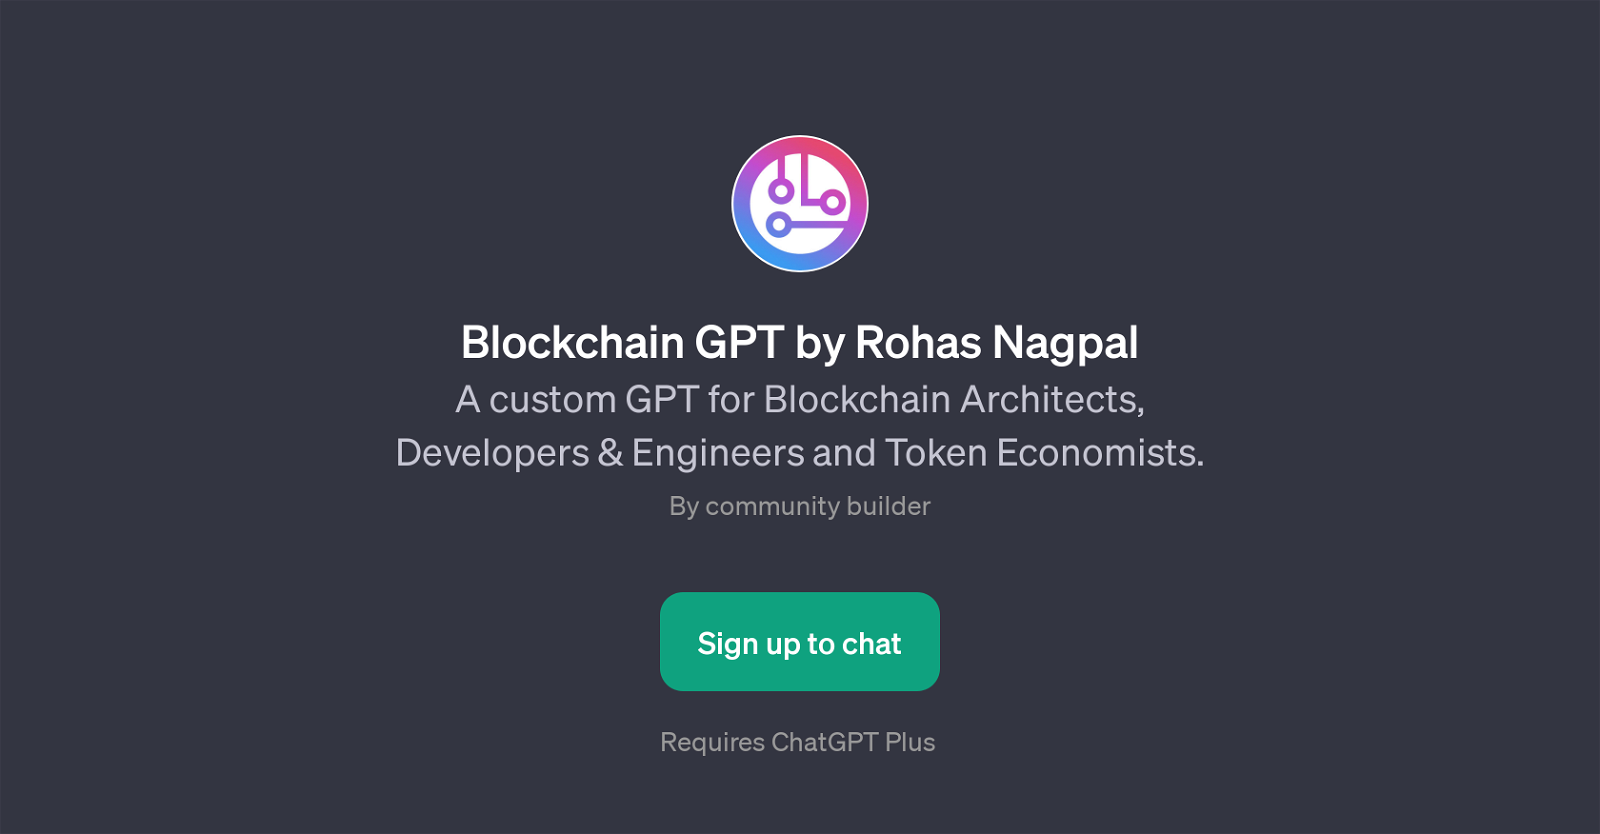 Blockchain GPT by Rohas Nagpal website